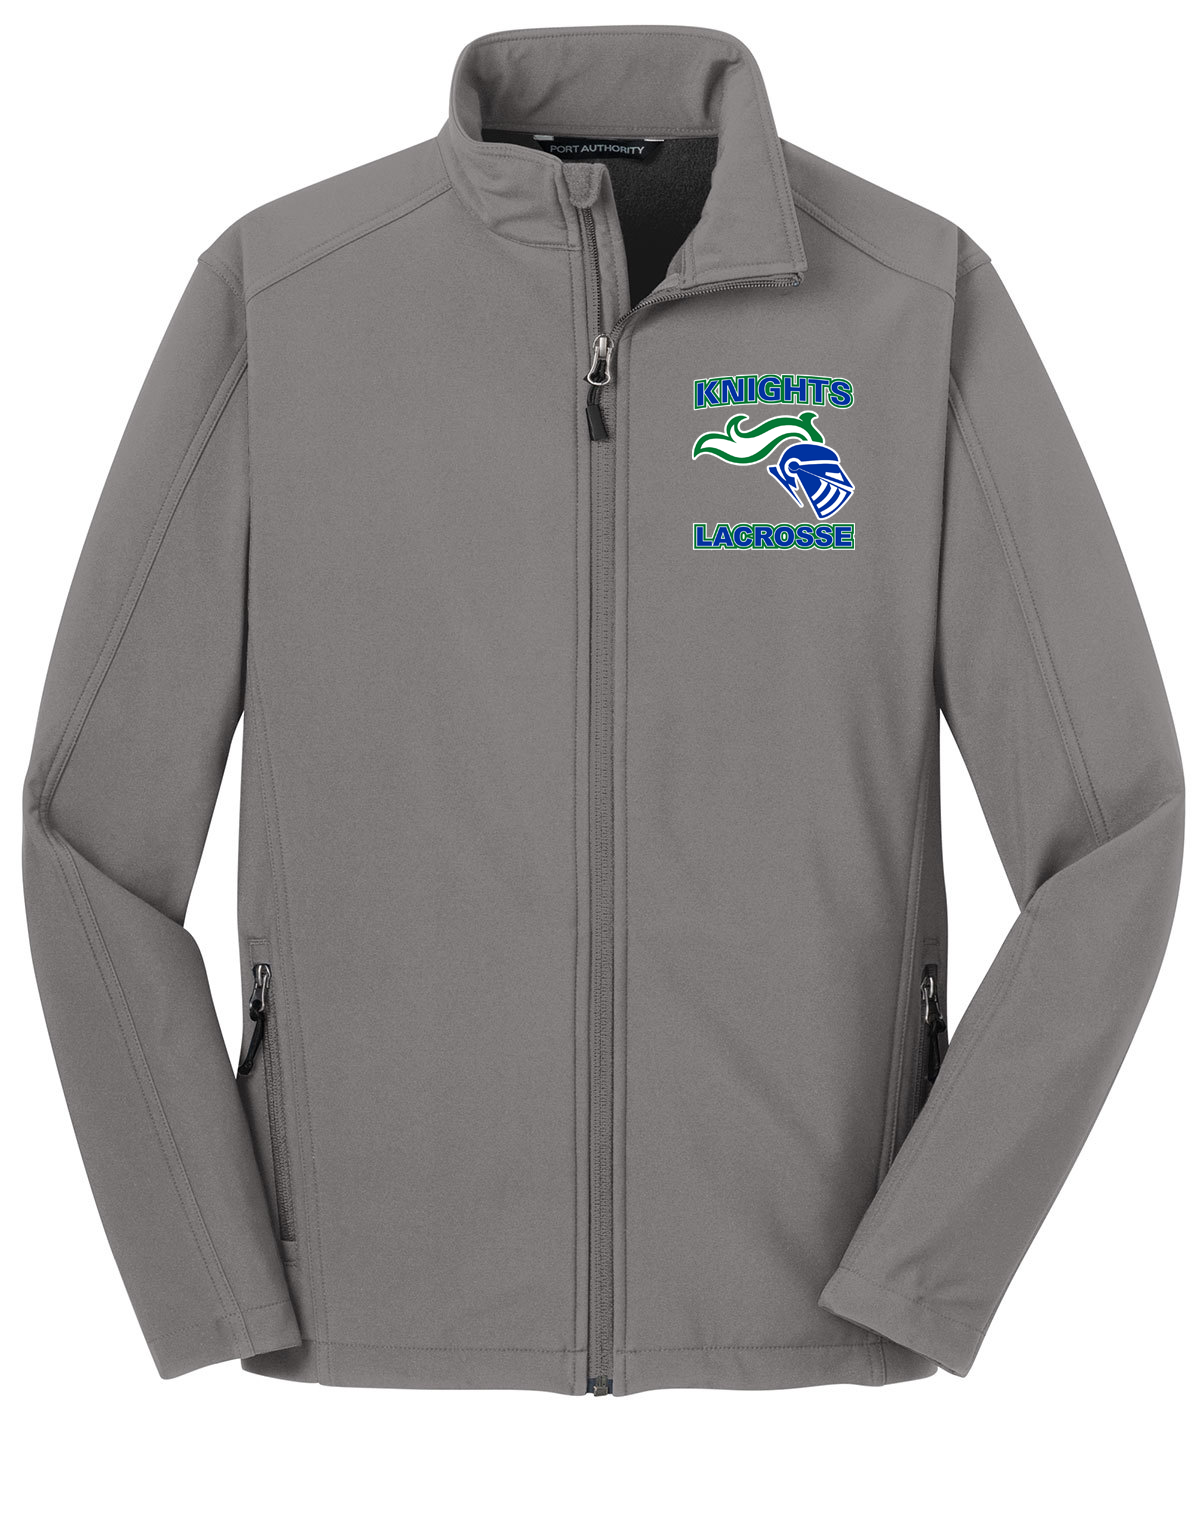 Lake Norman Lacrosse Men's Soft Shell Jacket